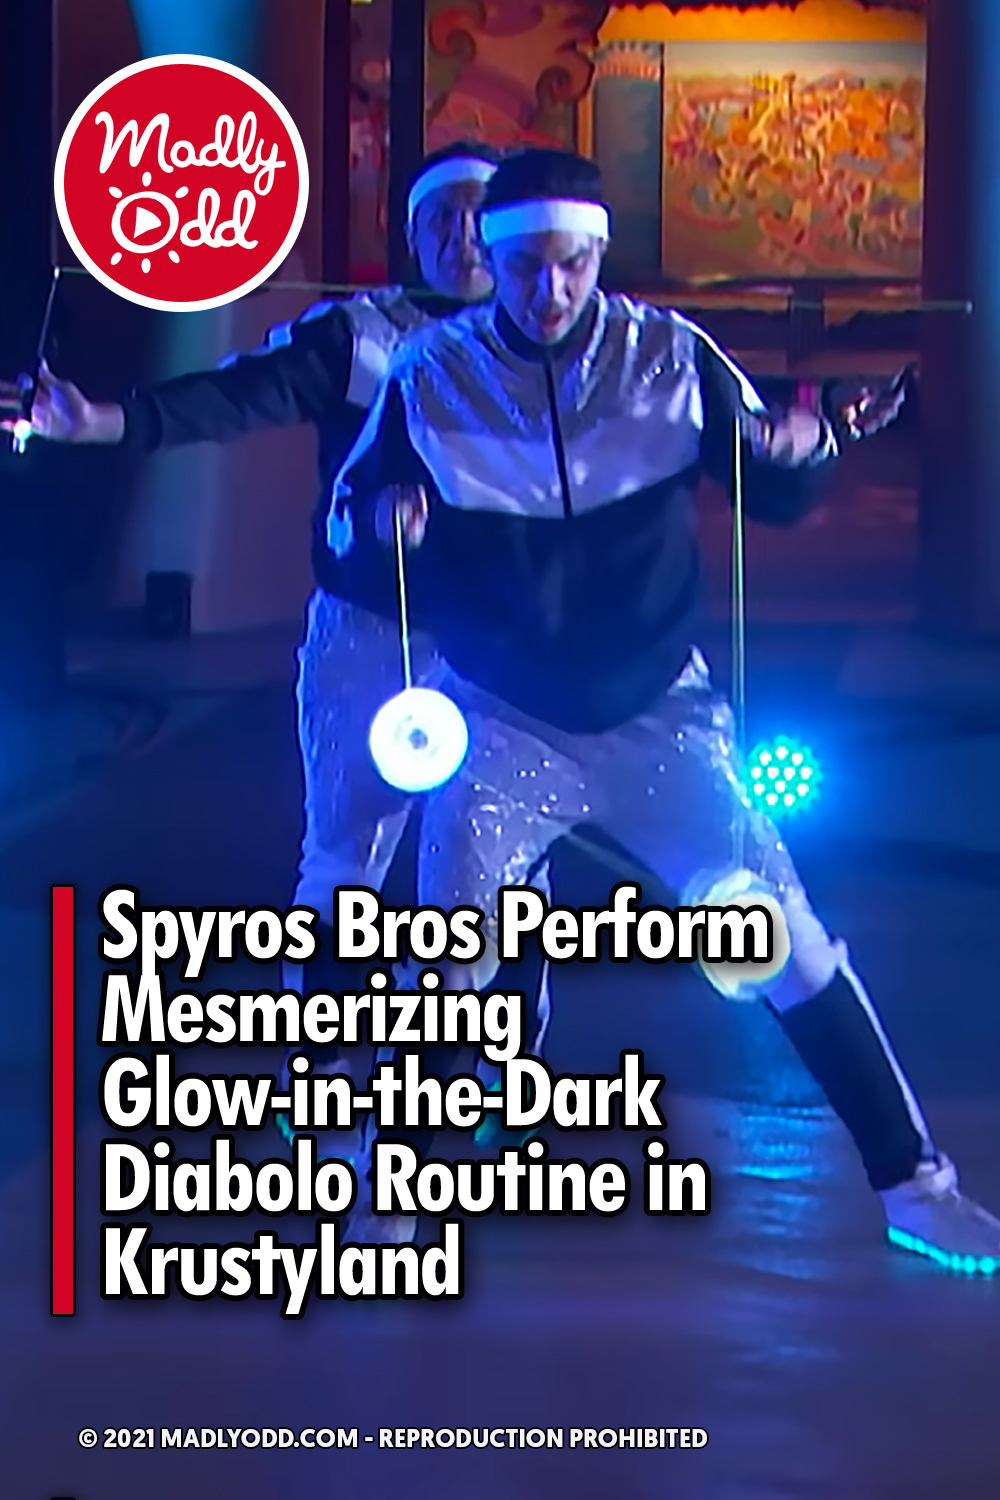 Spyros Bros Perform Mesmerizing Glow-in-the-Dark Diabolo Routine in Krustyland